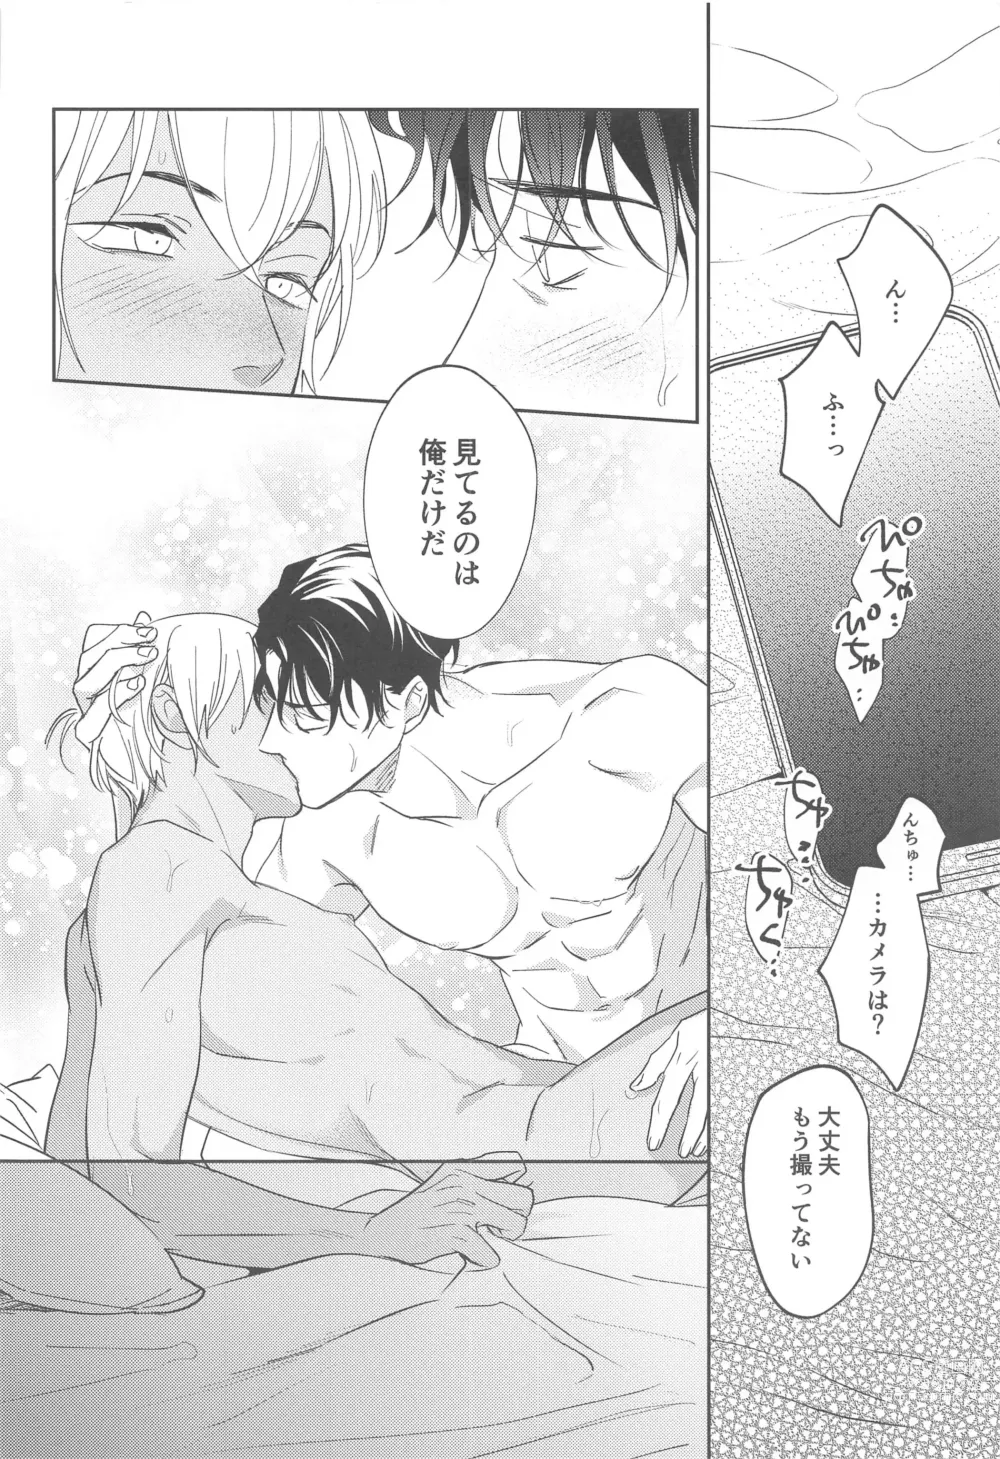 Page 31 of doujinshi REC